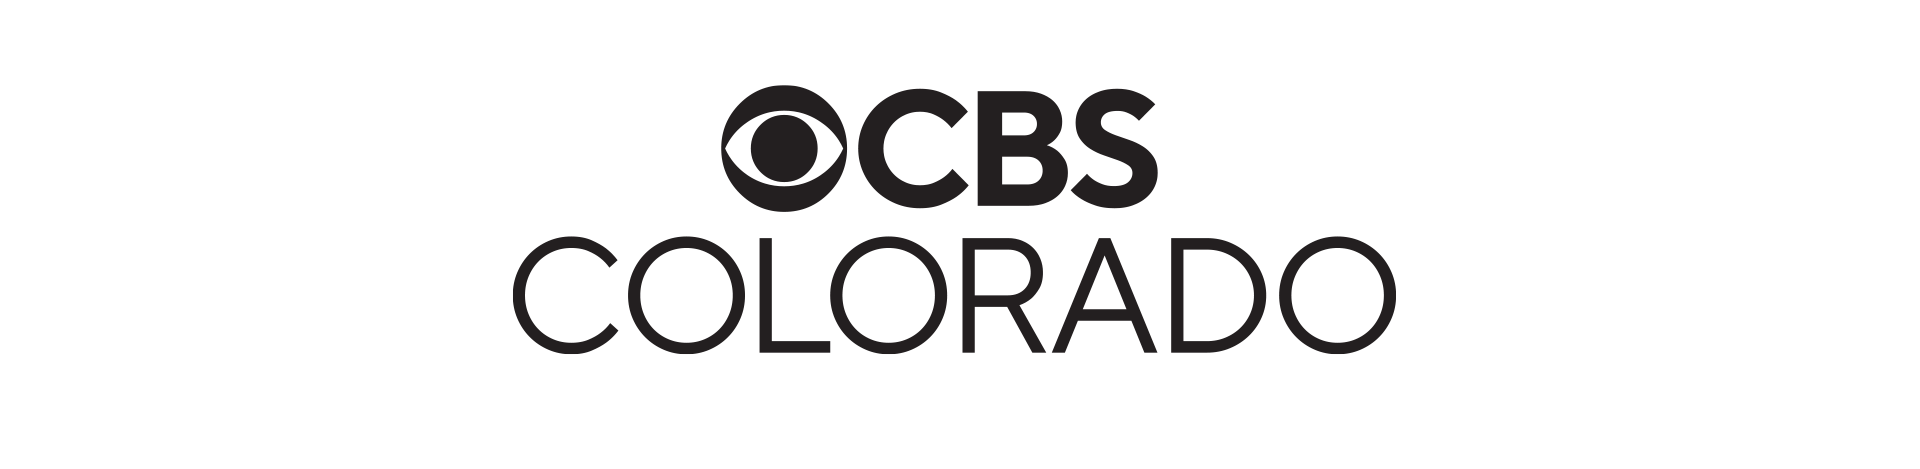 CBS Colorado logo